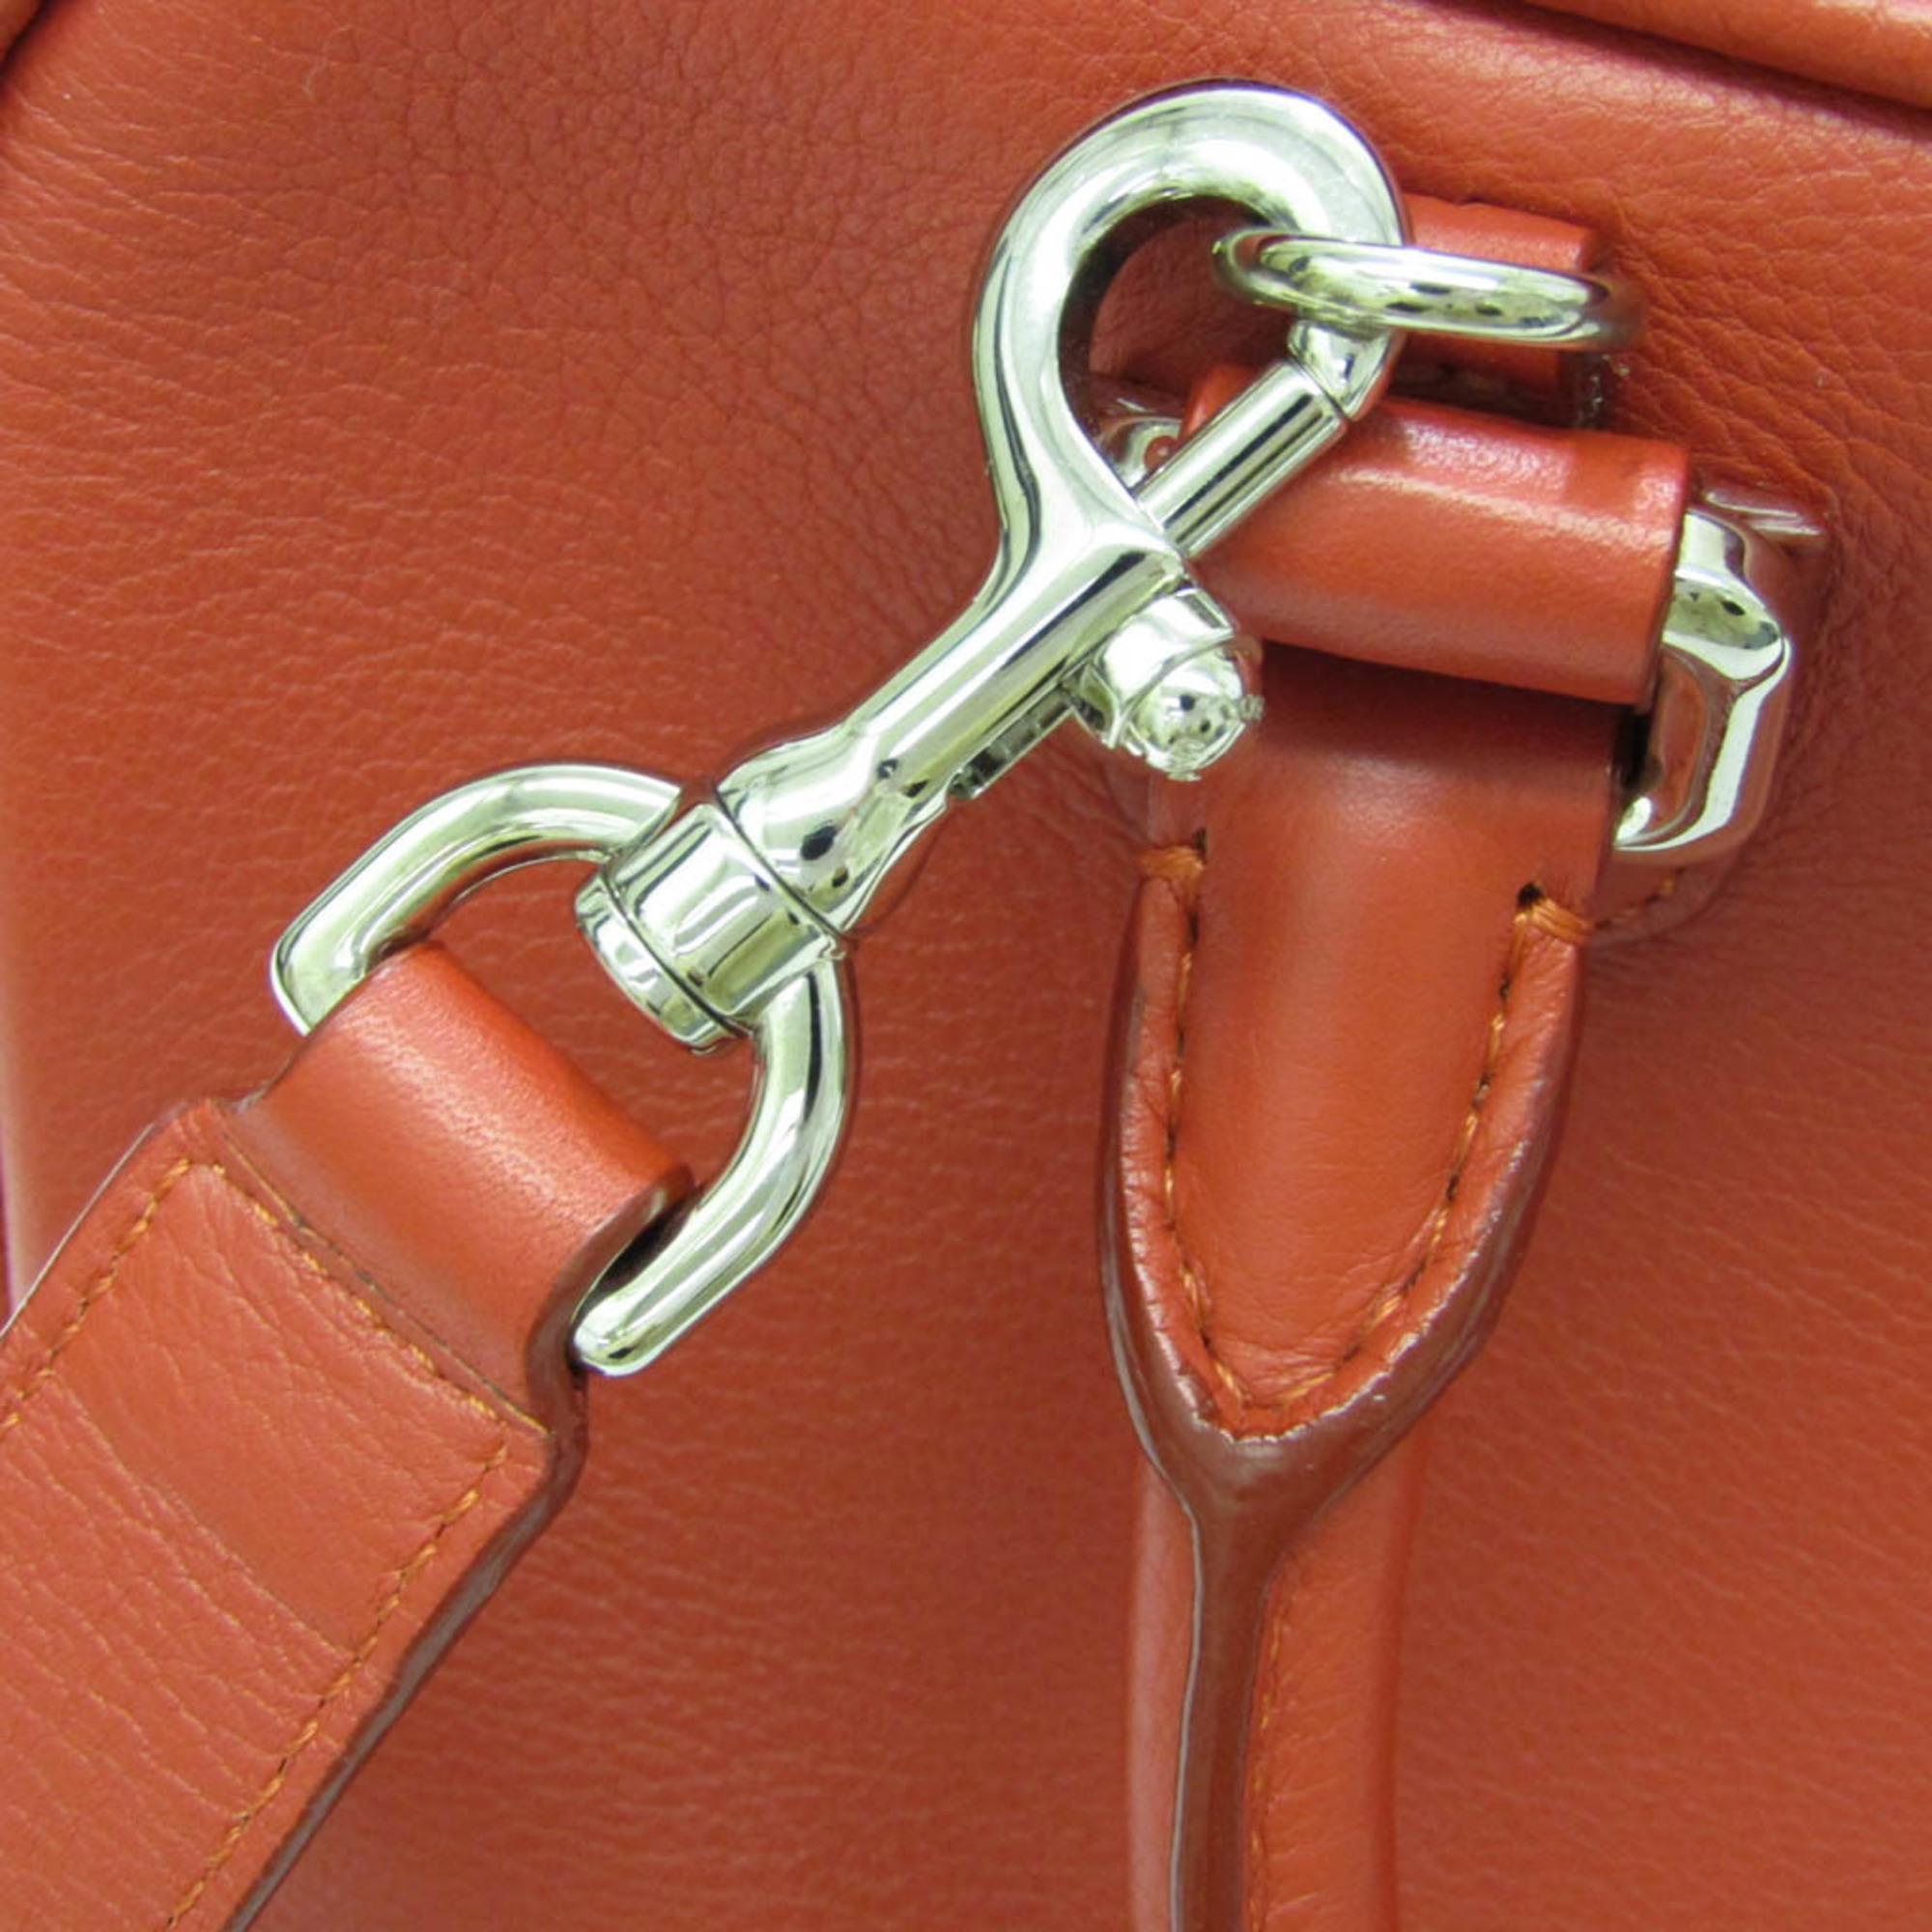 Loewe Amazona 75 Women's Leather Handbag,Shoulder Bag Red Color